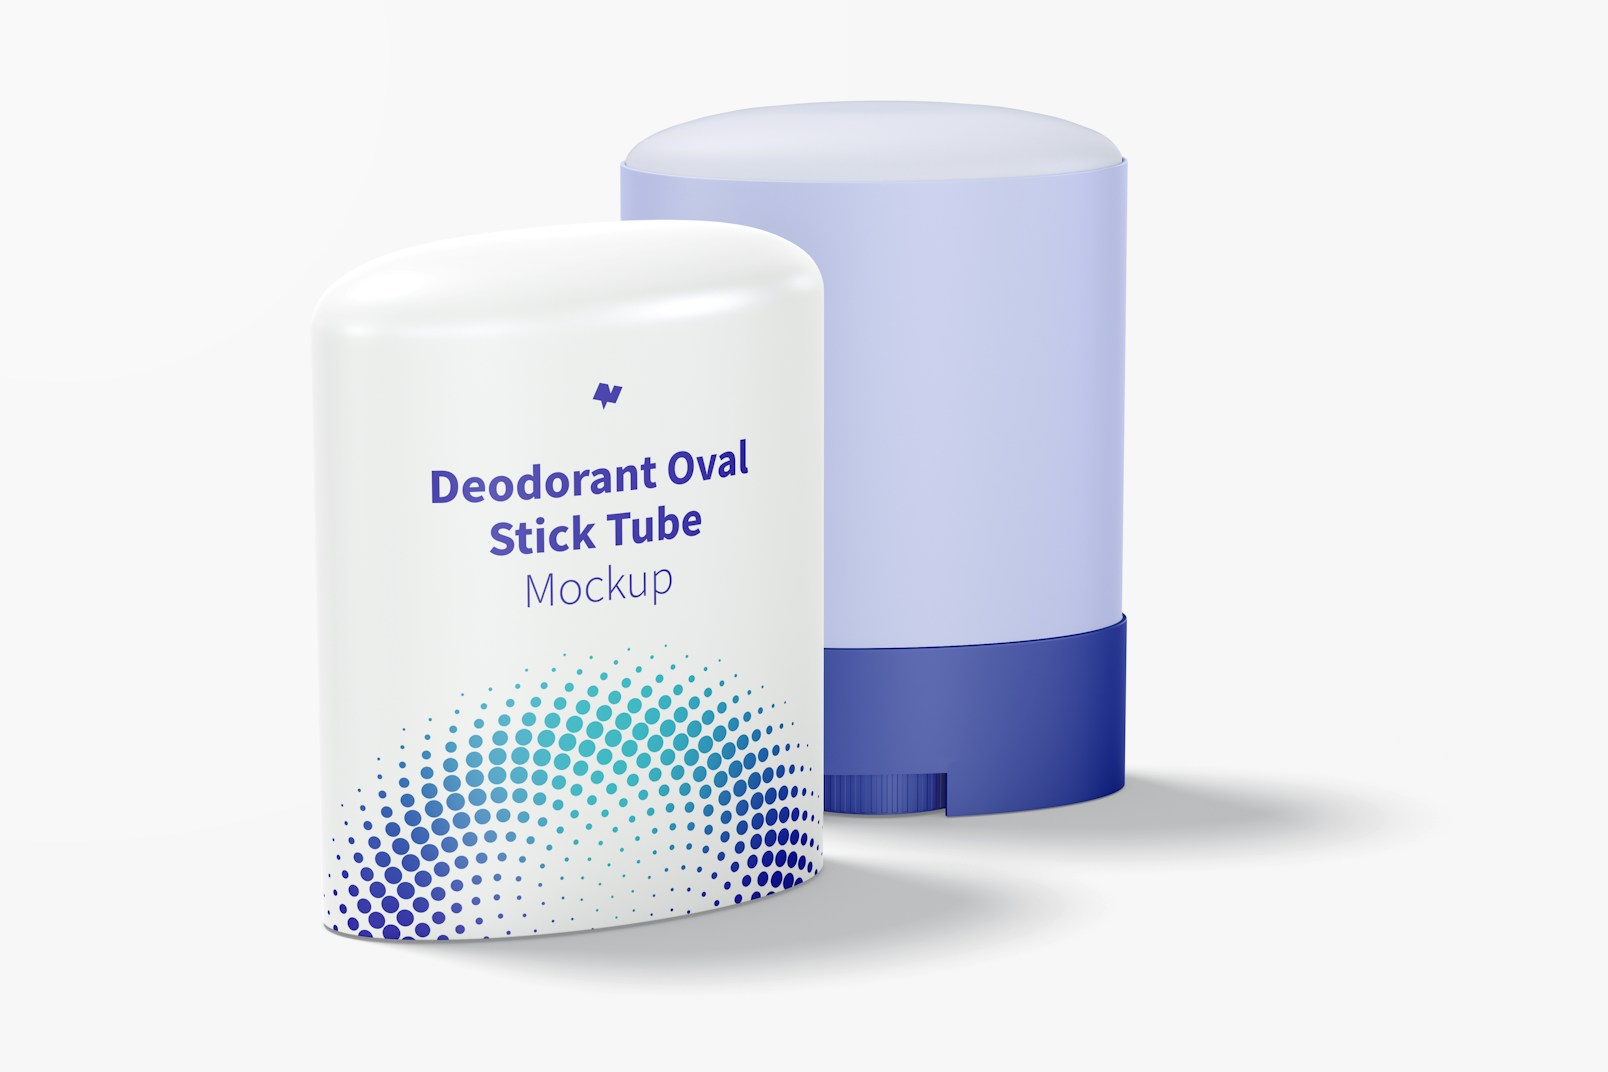 Deodorant Oval Stick Tubes Mockup